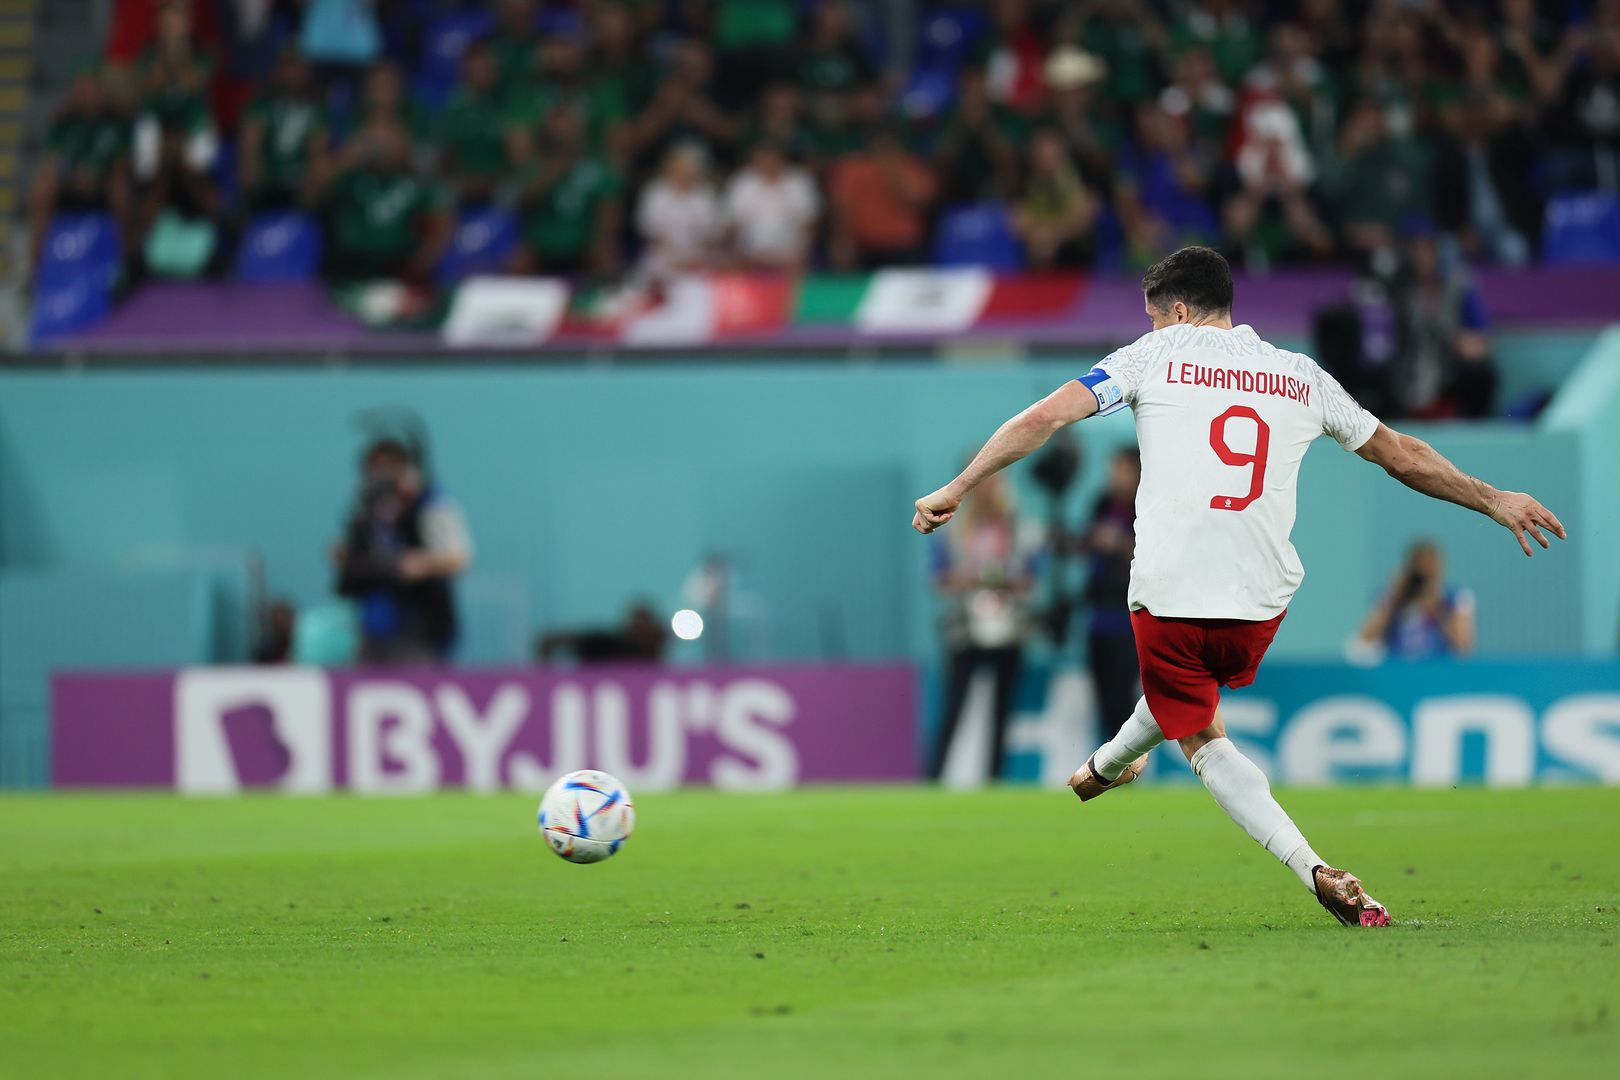 Why didn't Lewandowski score a penalty kick?  Scientists have studied it - O2